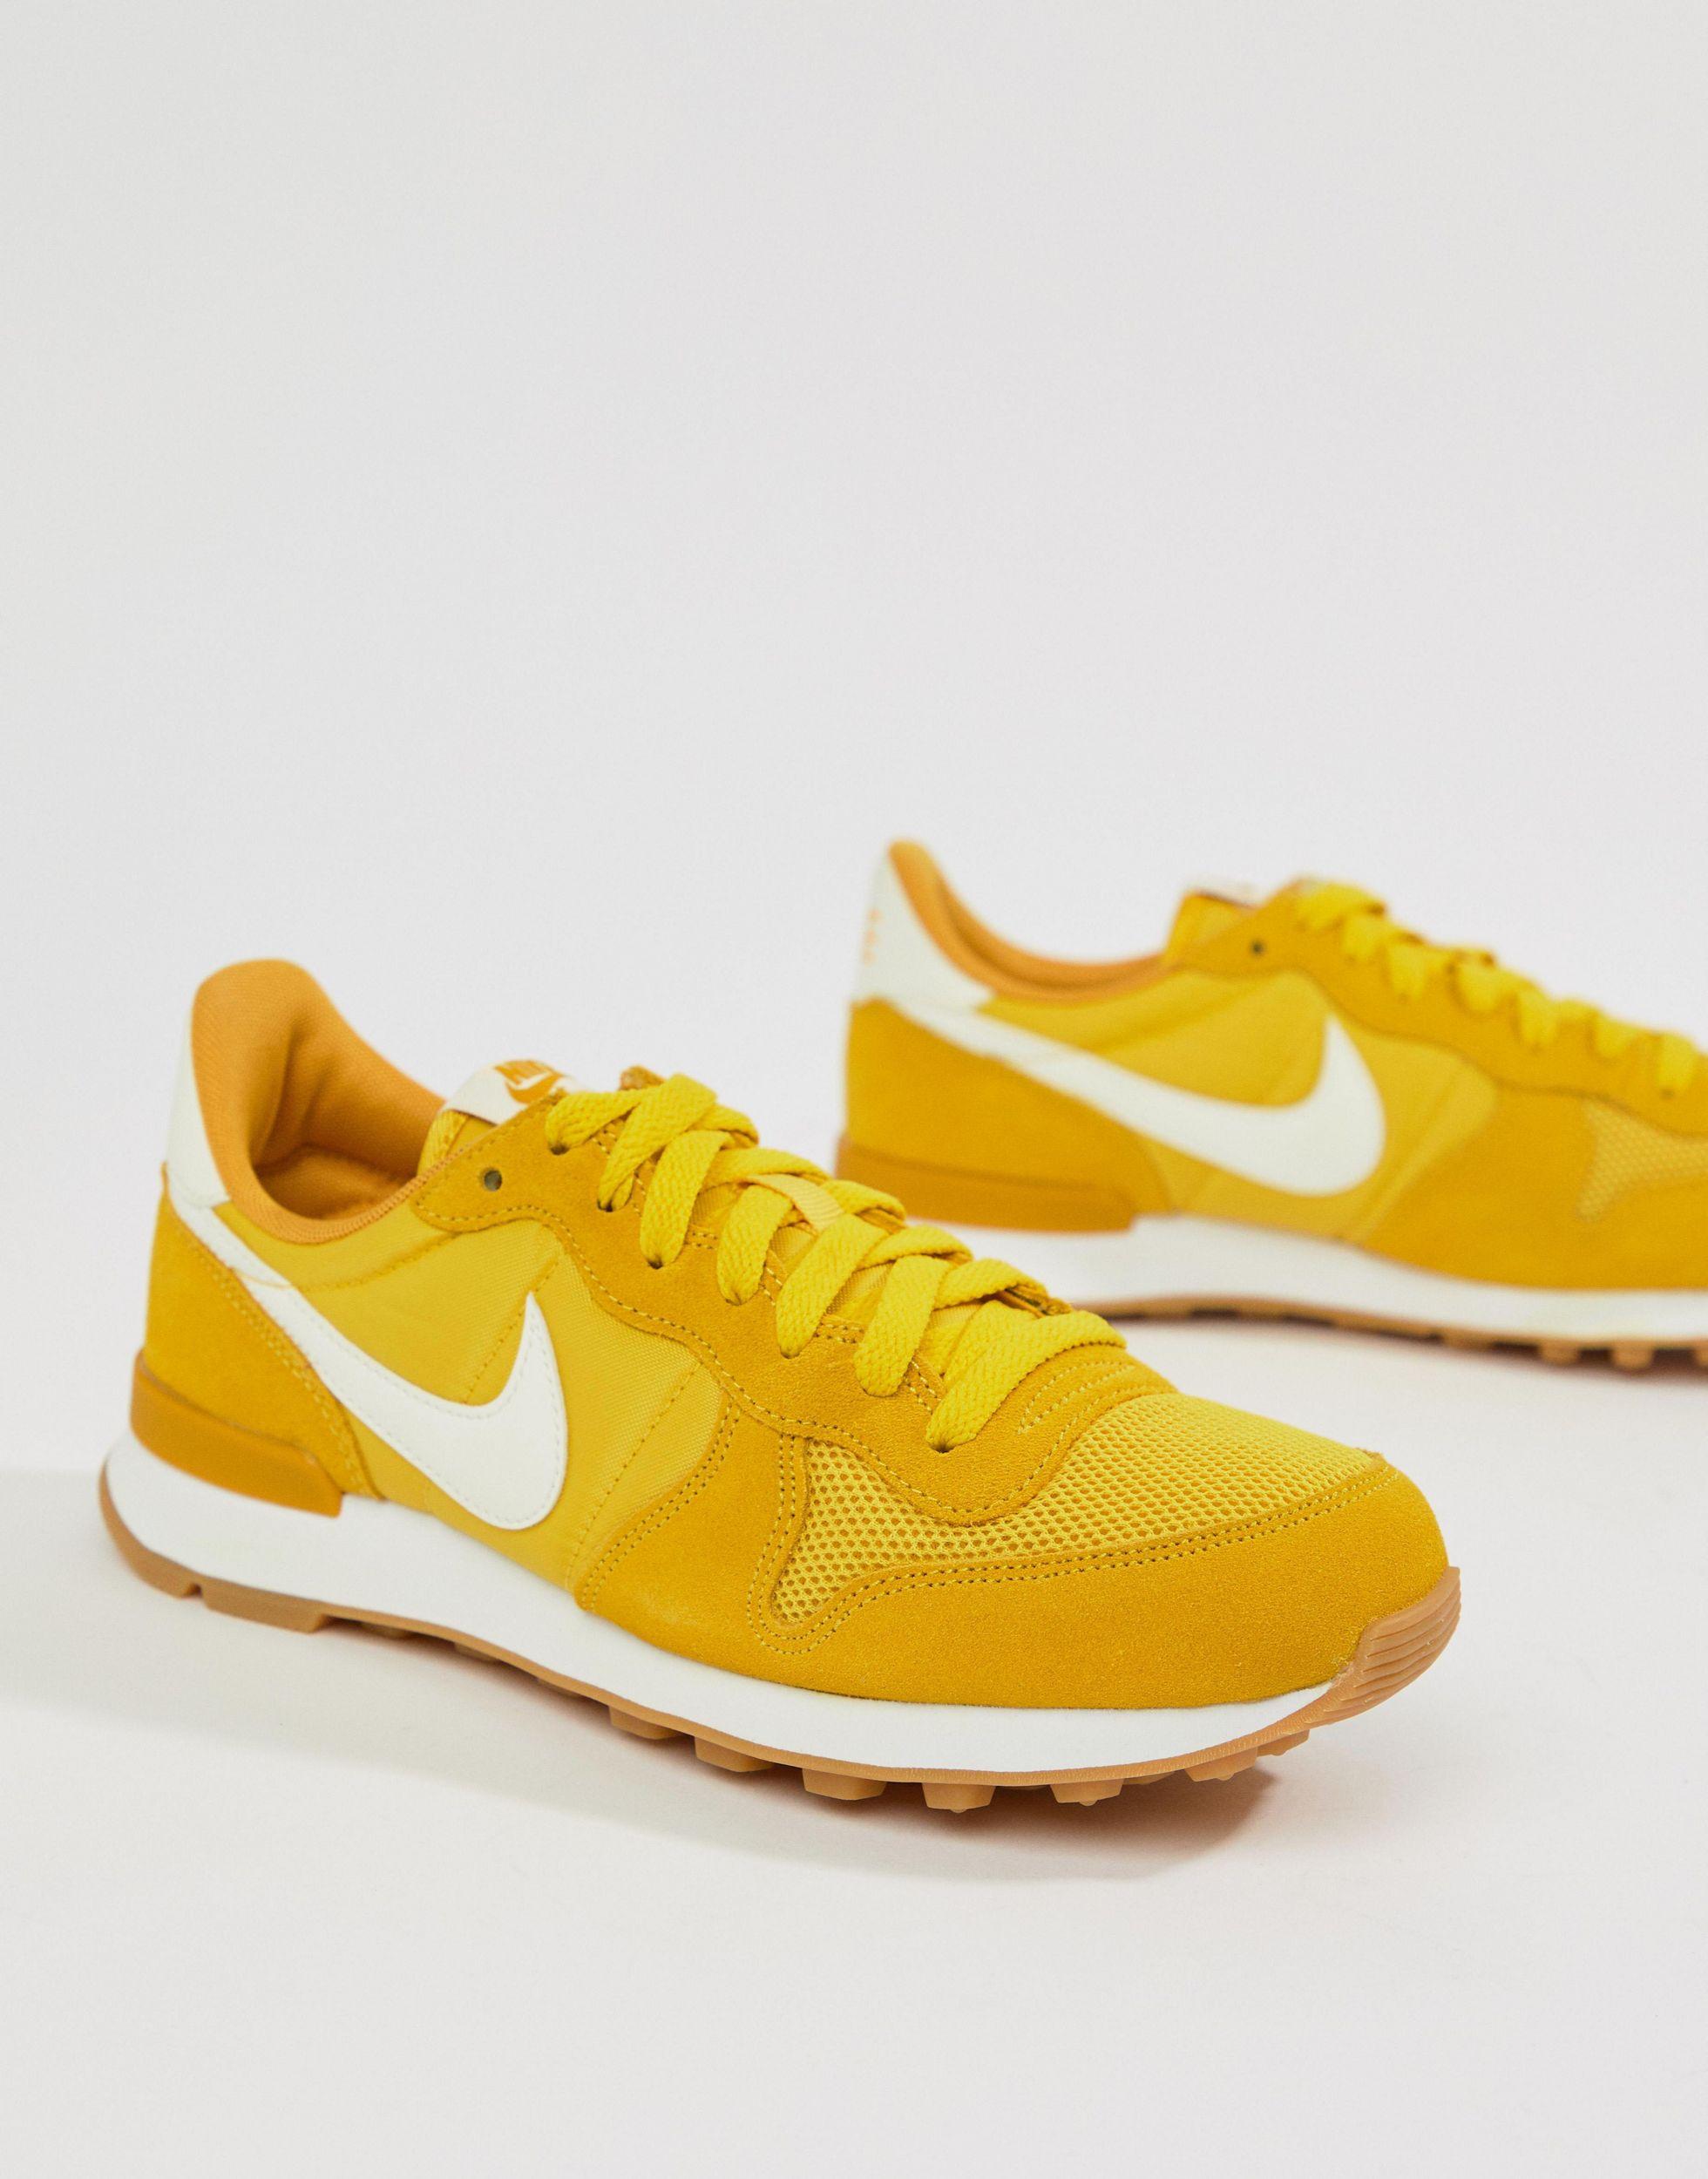 Nike Internationalist Trainers in Yellow - Lyst